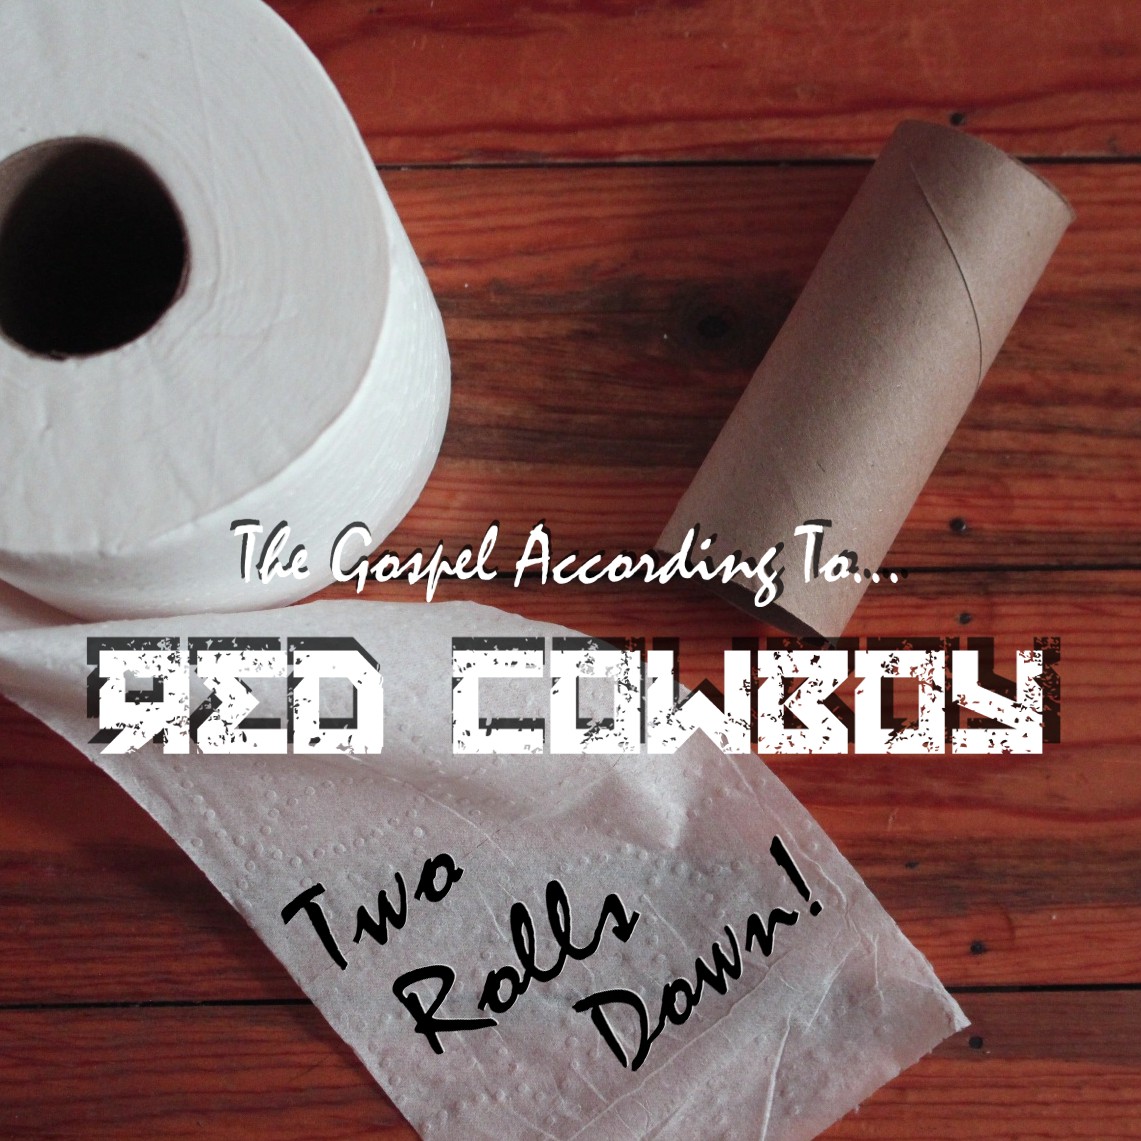 Red Cowboy Two Rolls Down The Gospel Album